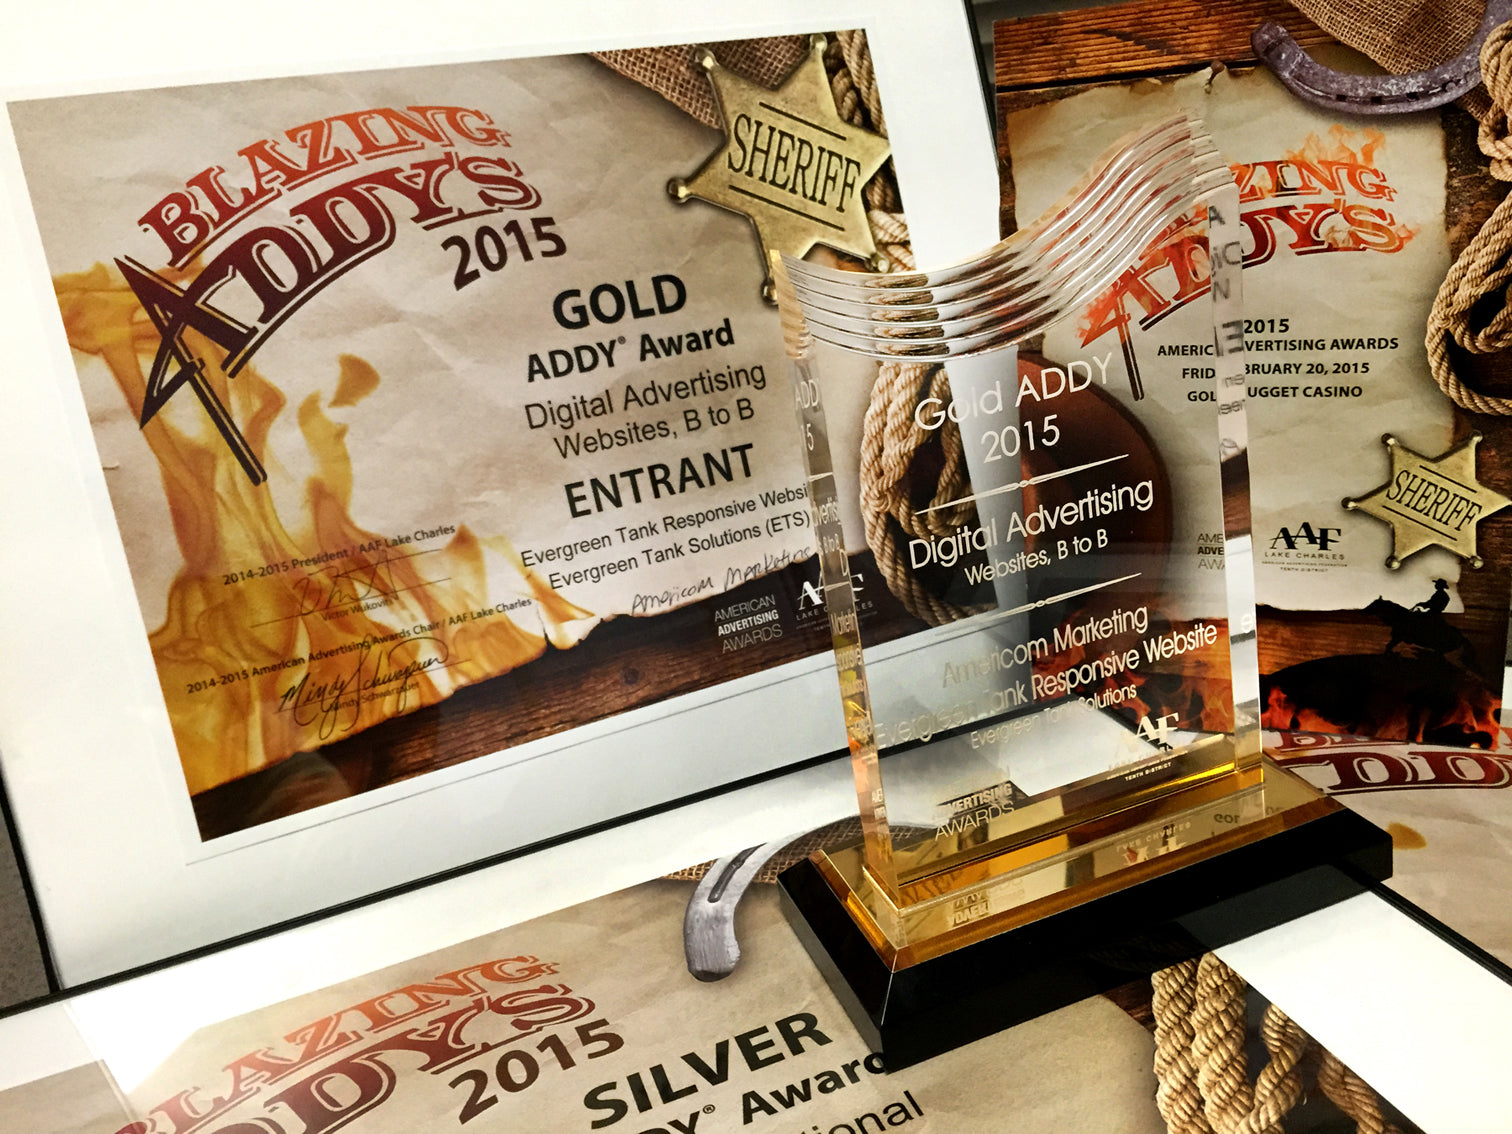 Blazing Addys 2015 Gold Award Americom Marketing